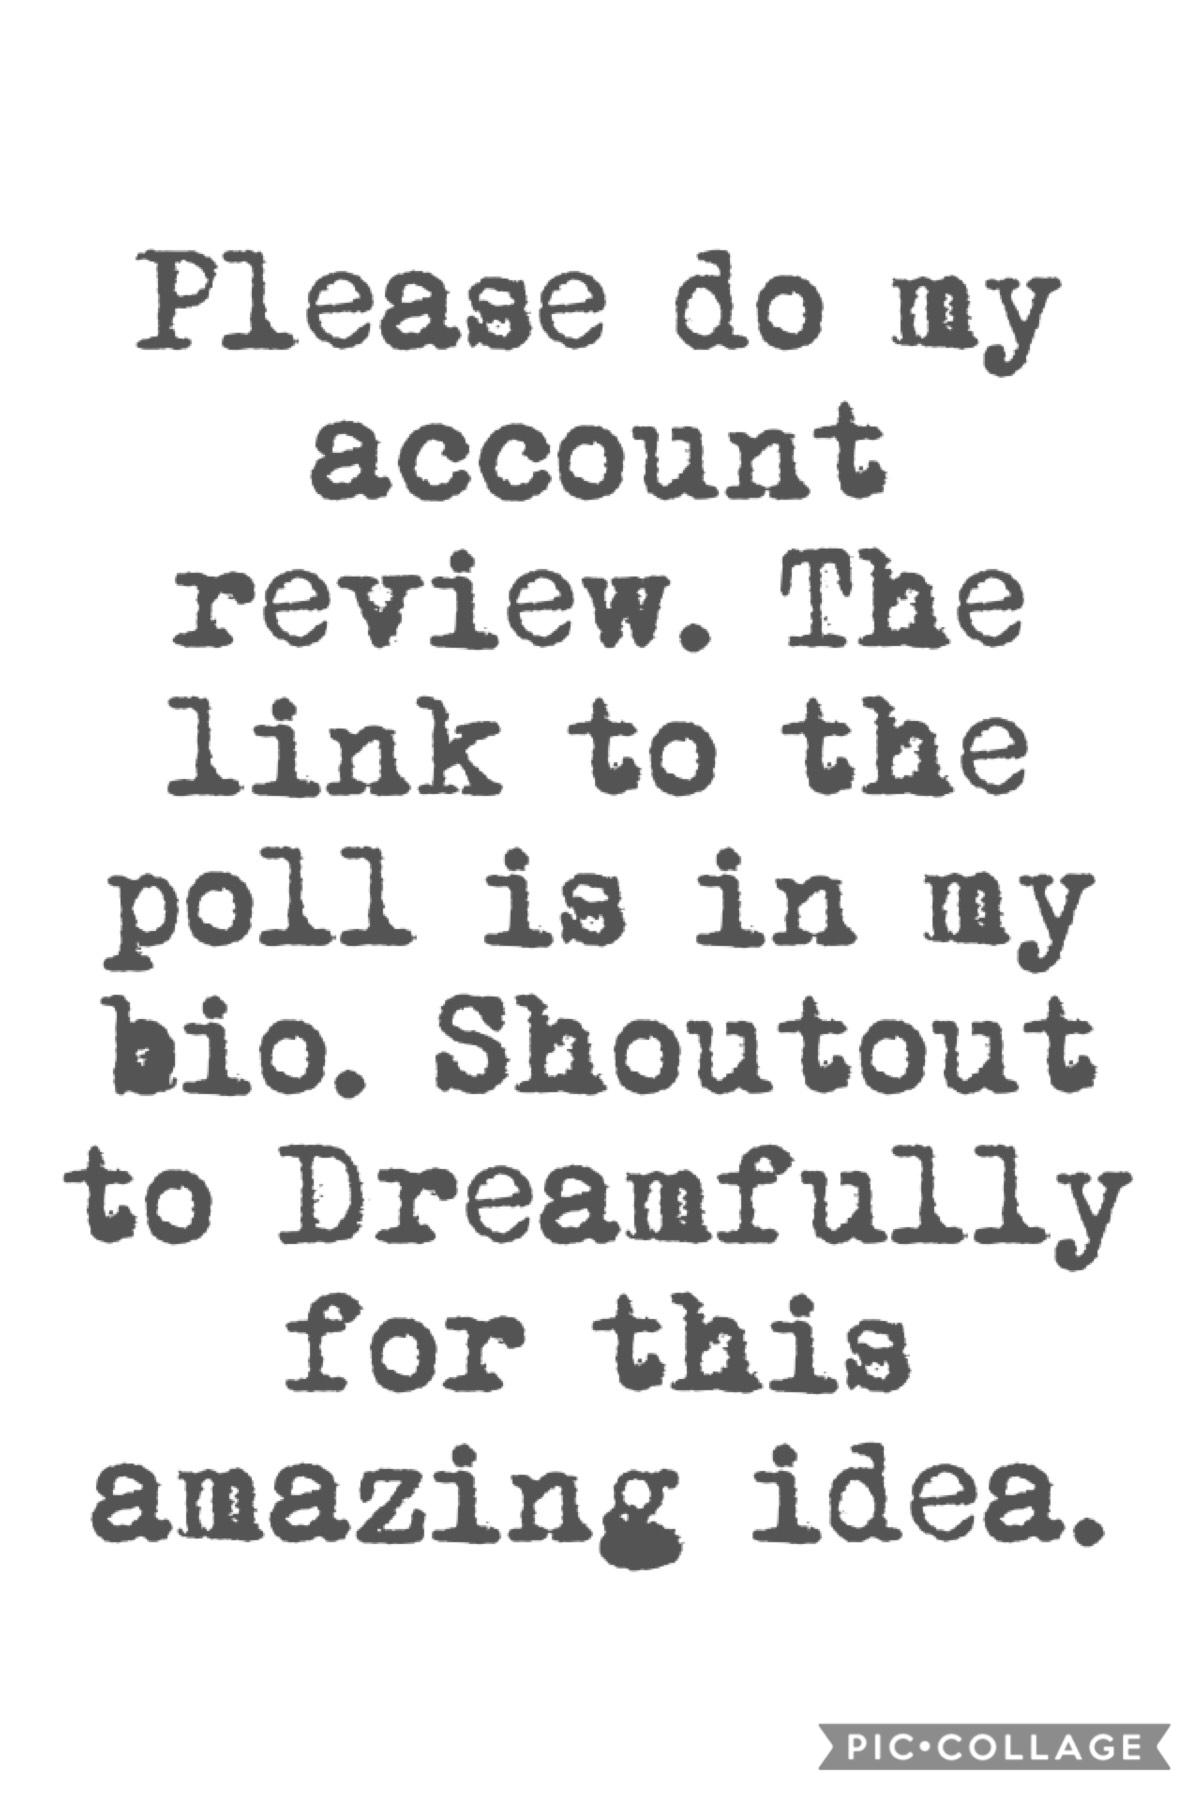 Plz do the review! Thanks Dreamfully!